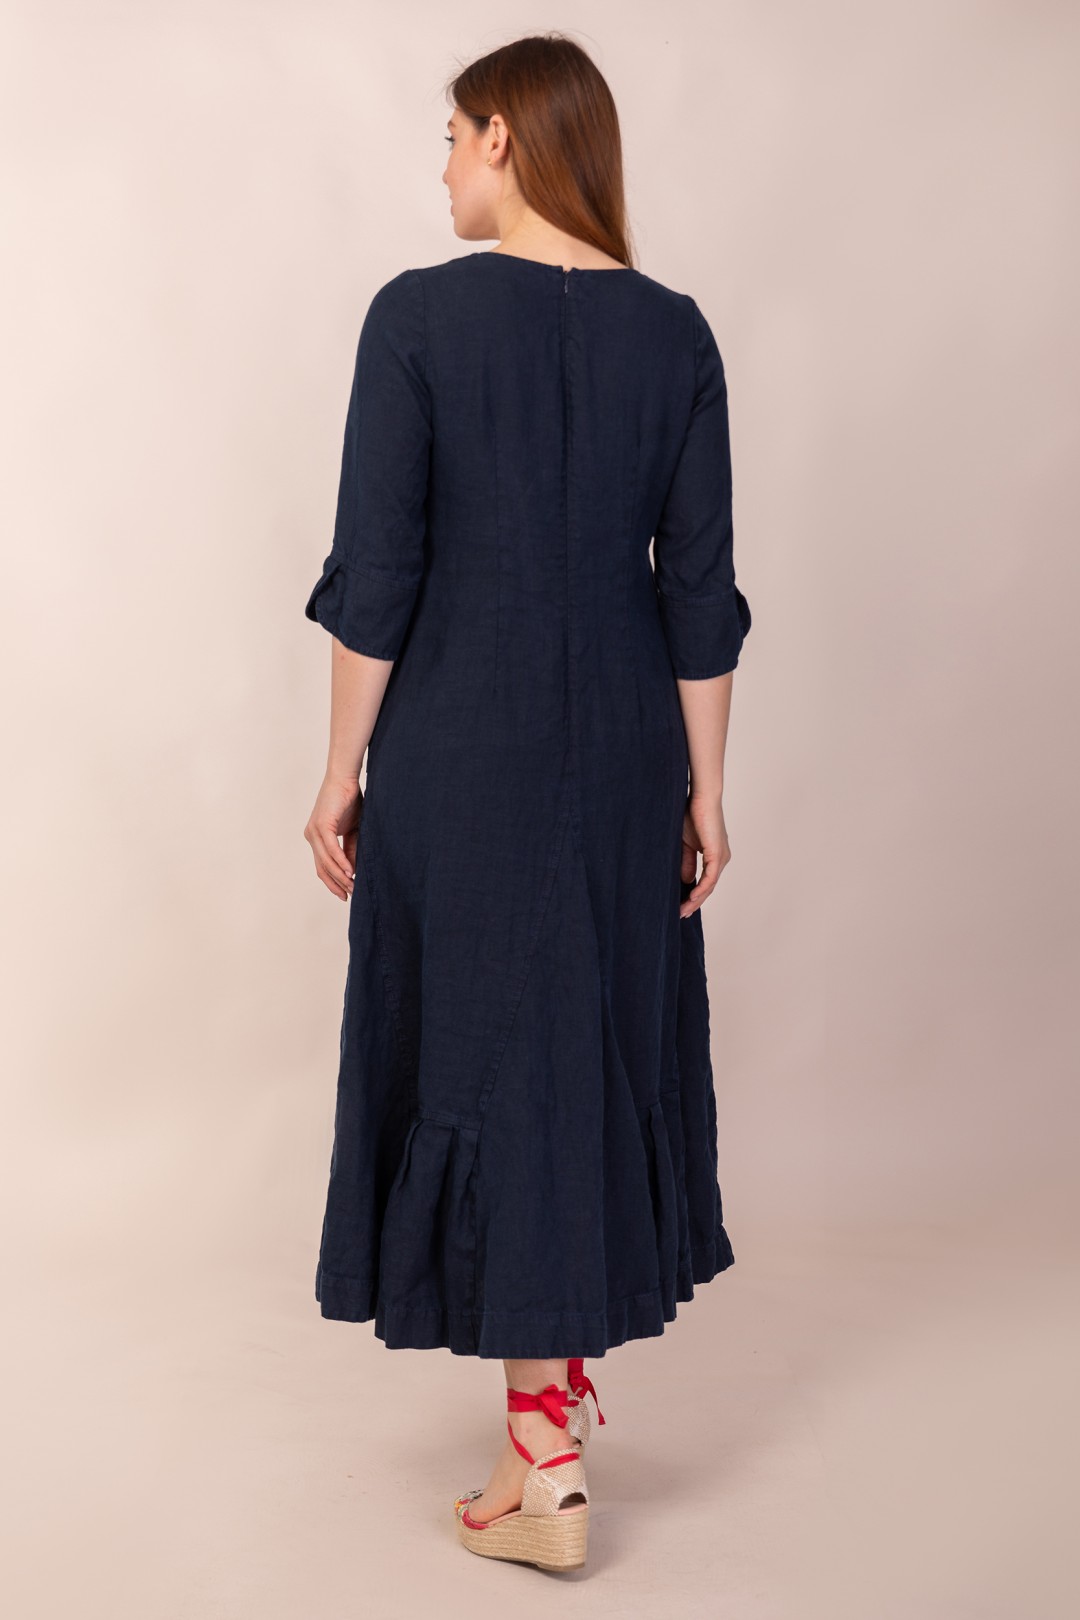 Платье Ружана Avaro 445-2 синий